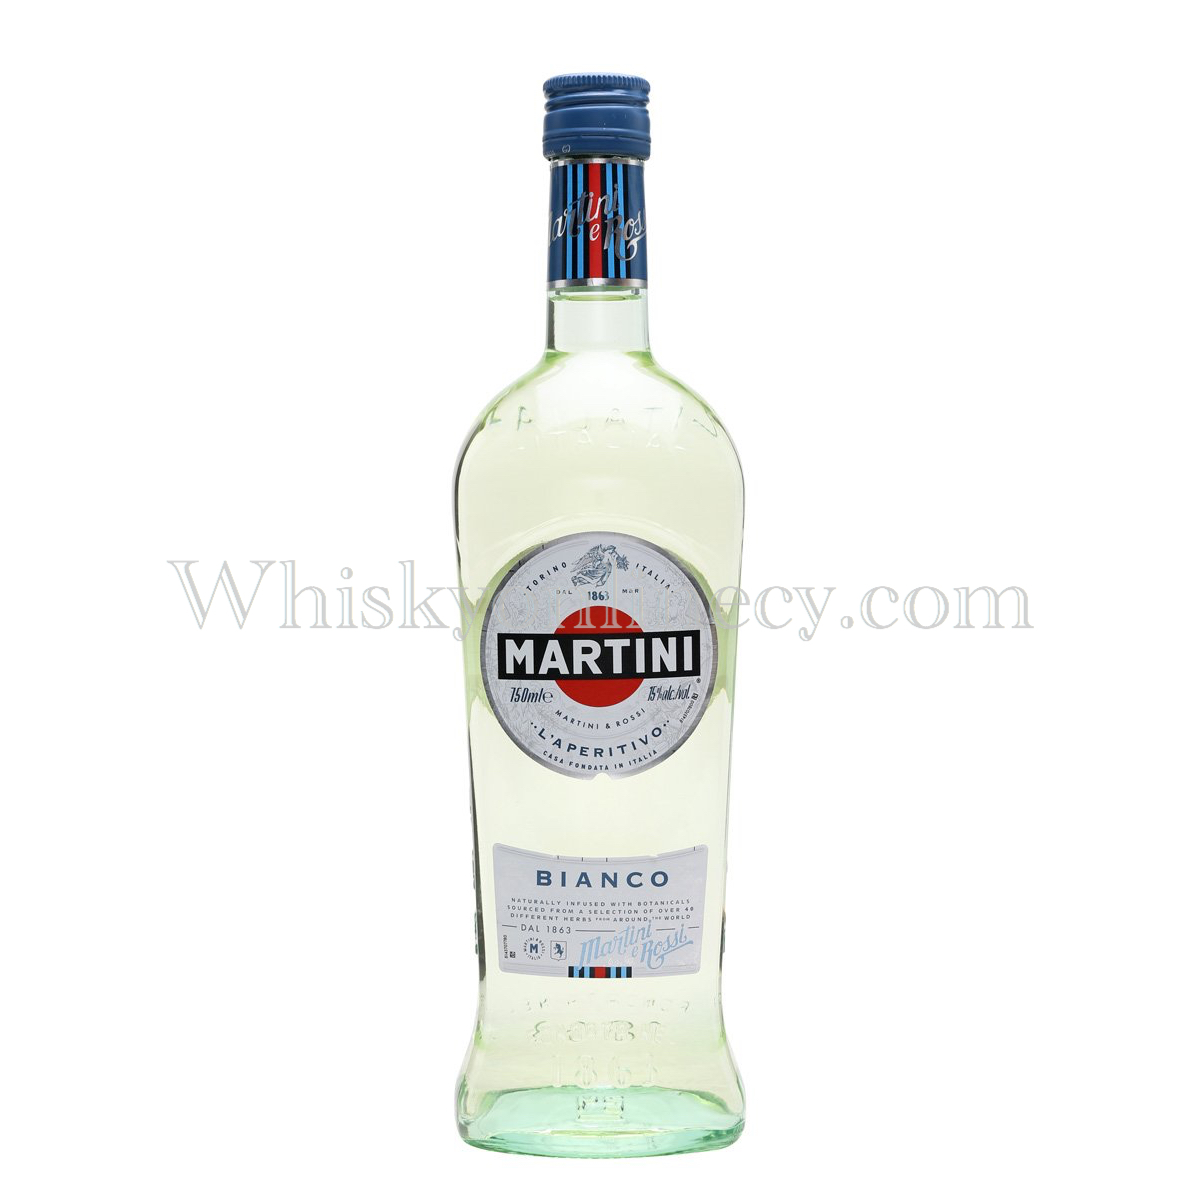 Whisky Online Cyprus - Martini Bianco (1L, 15%)